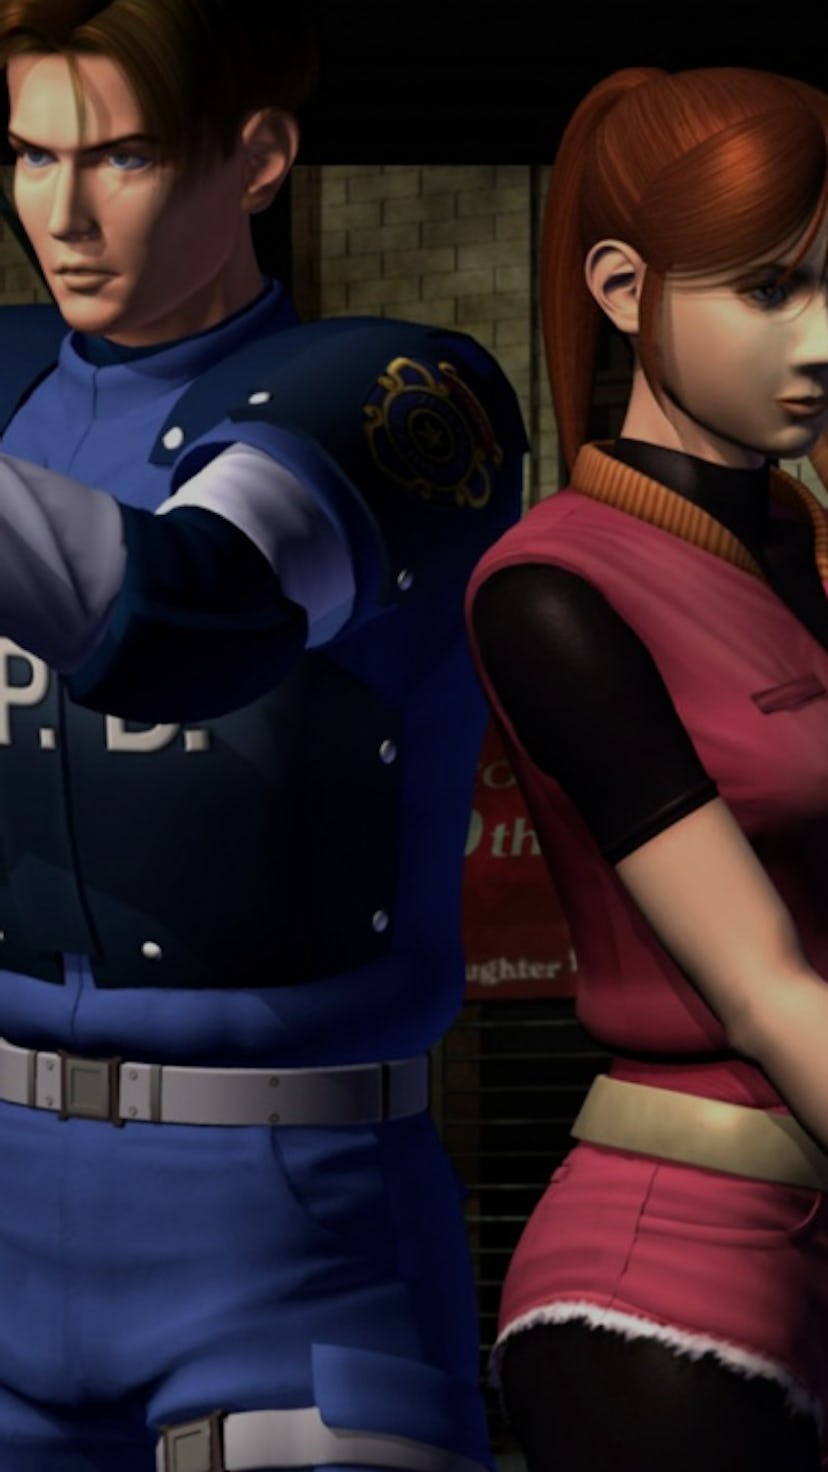 A promotional screenshot for Resident Evil 2